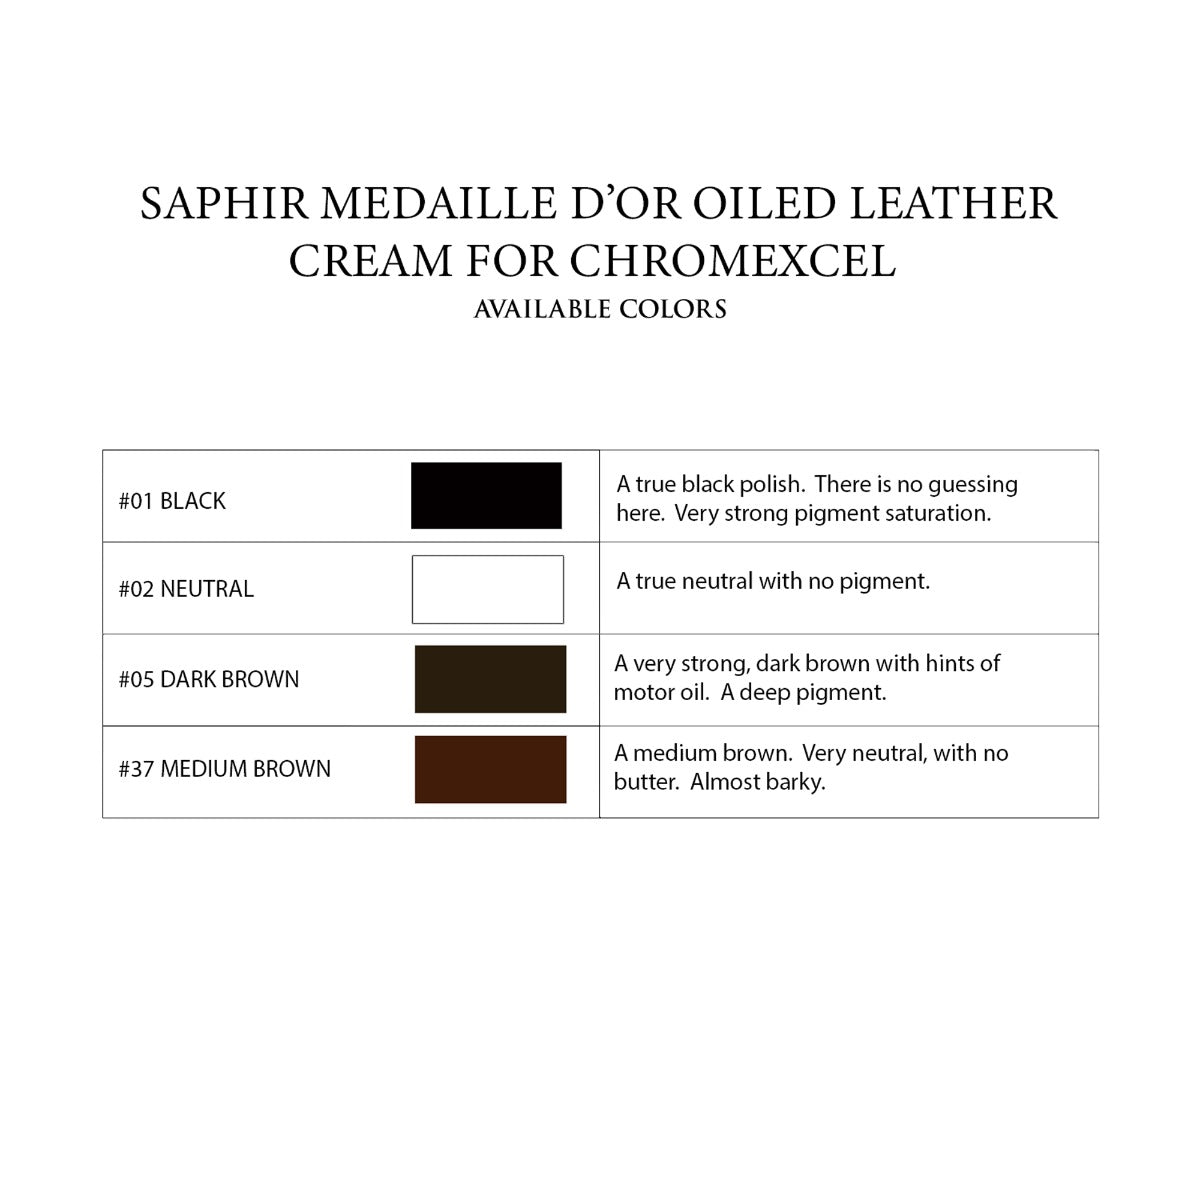 KirbyAllison.com's Saphir Medaille d'Or Oiled Leather Cream for Chromexcel, made in France.